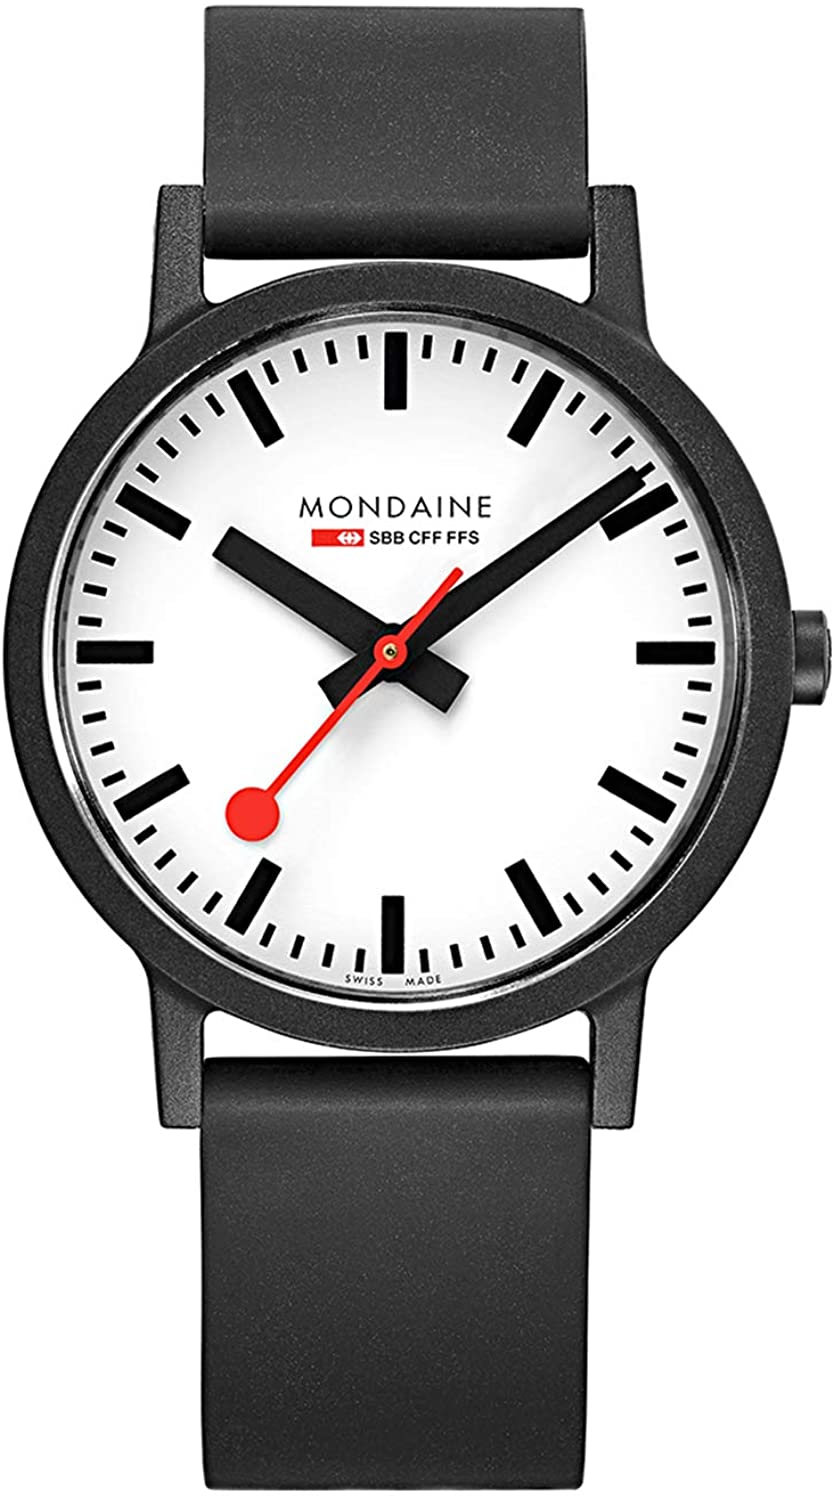 Mondaine Men's SBB Stainless Steel Essence Swiss Quartz Watch with Rubber Strap, Black (Model: MS1.41110.RB)…